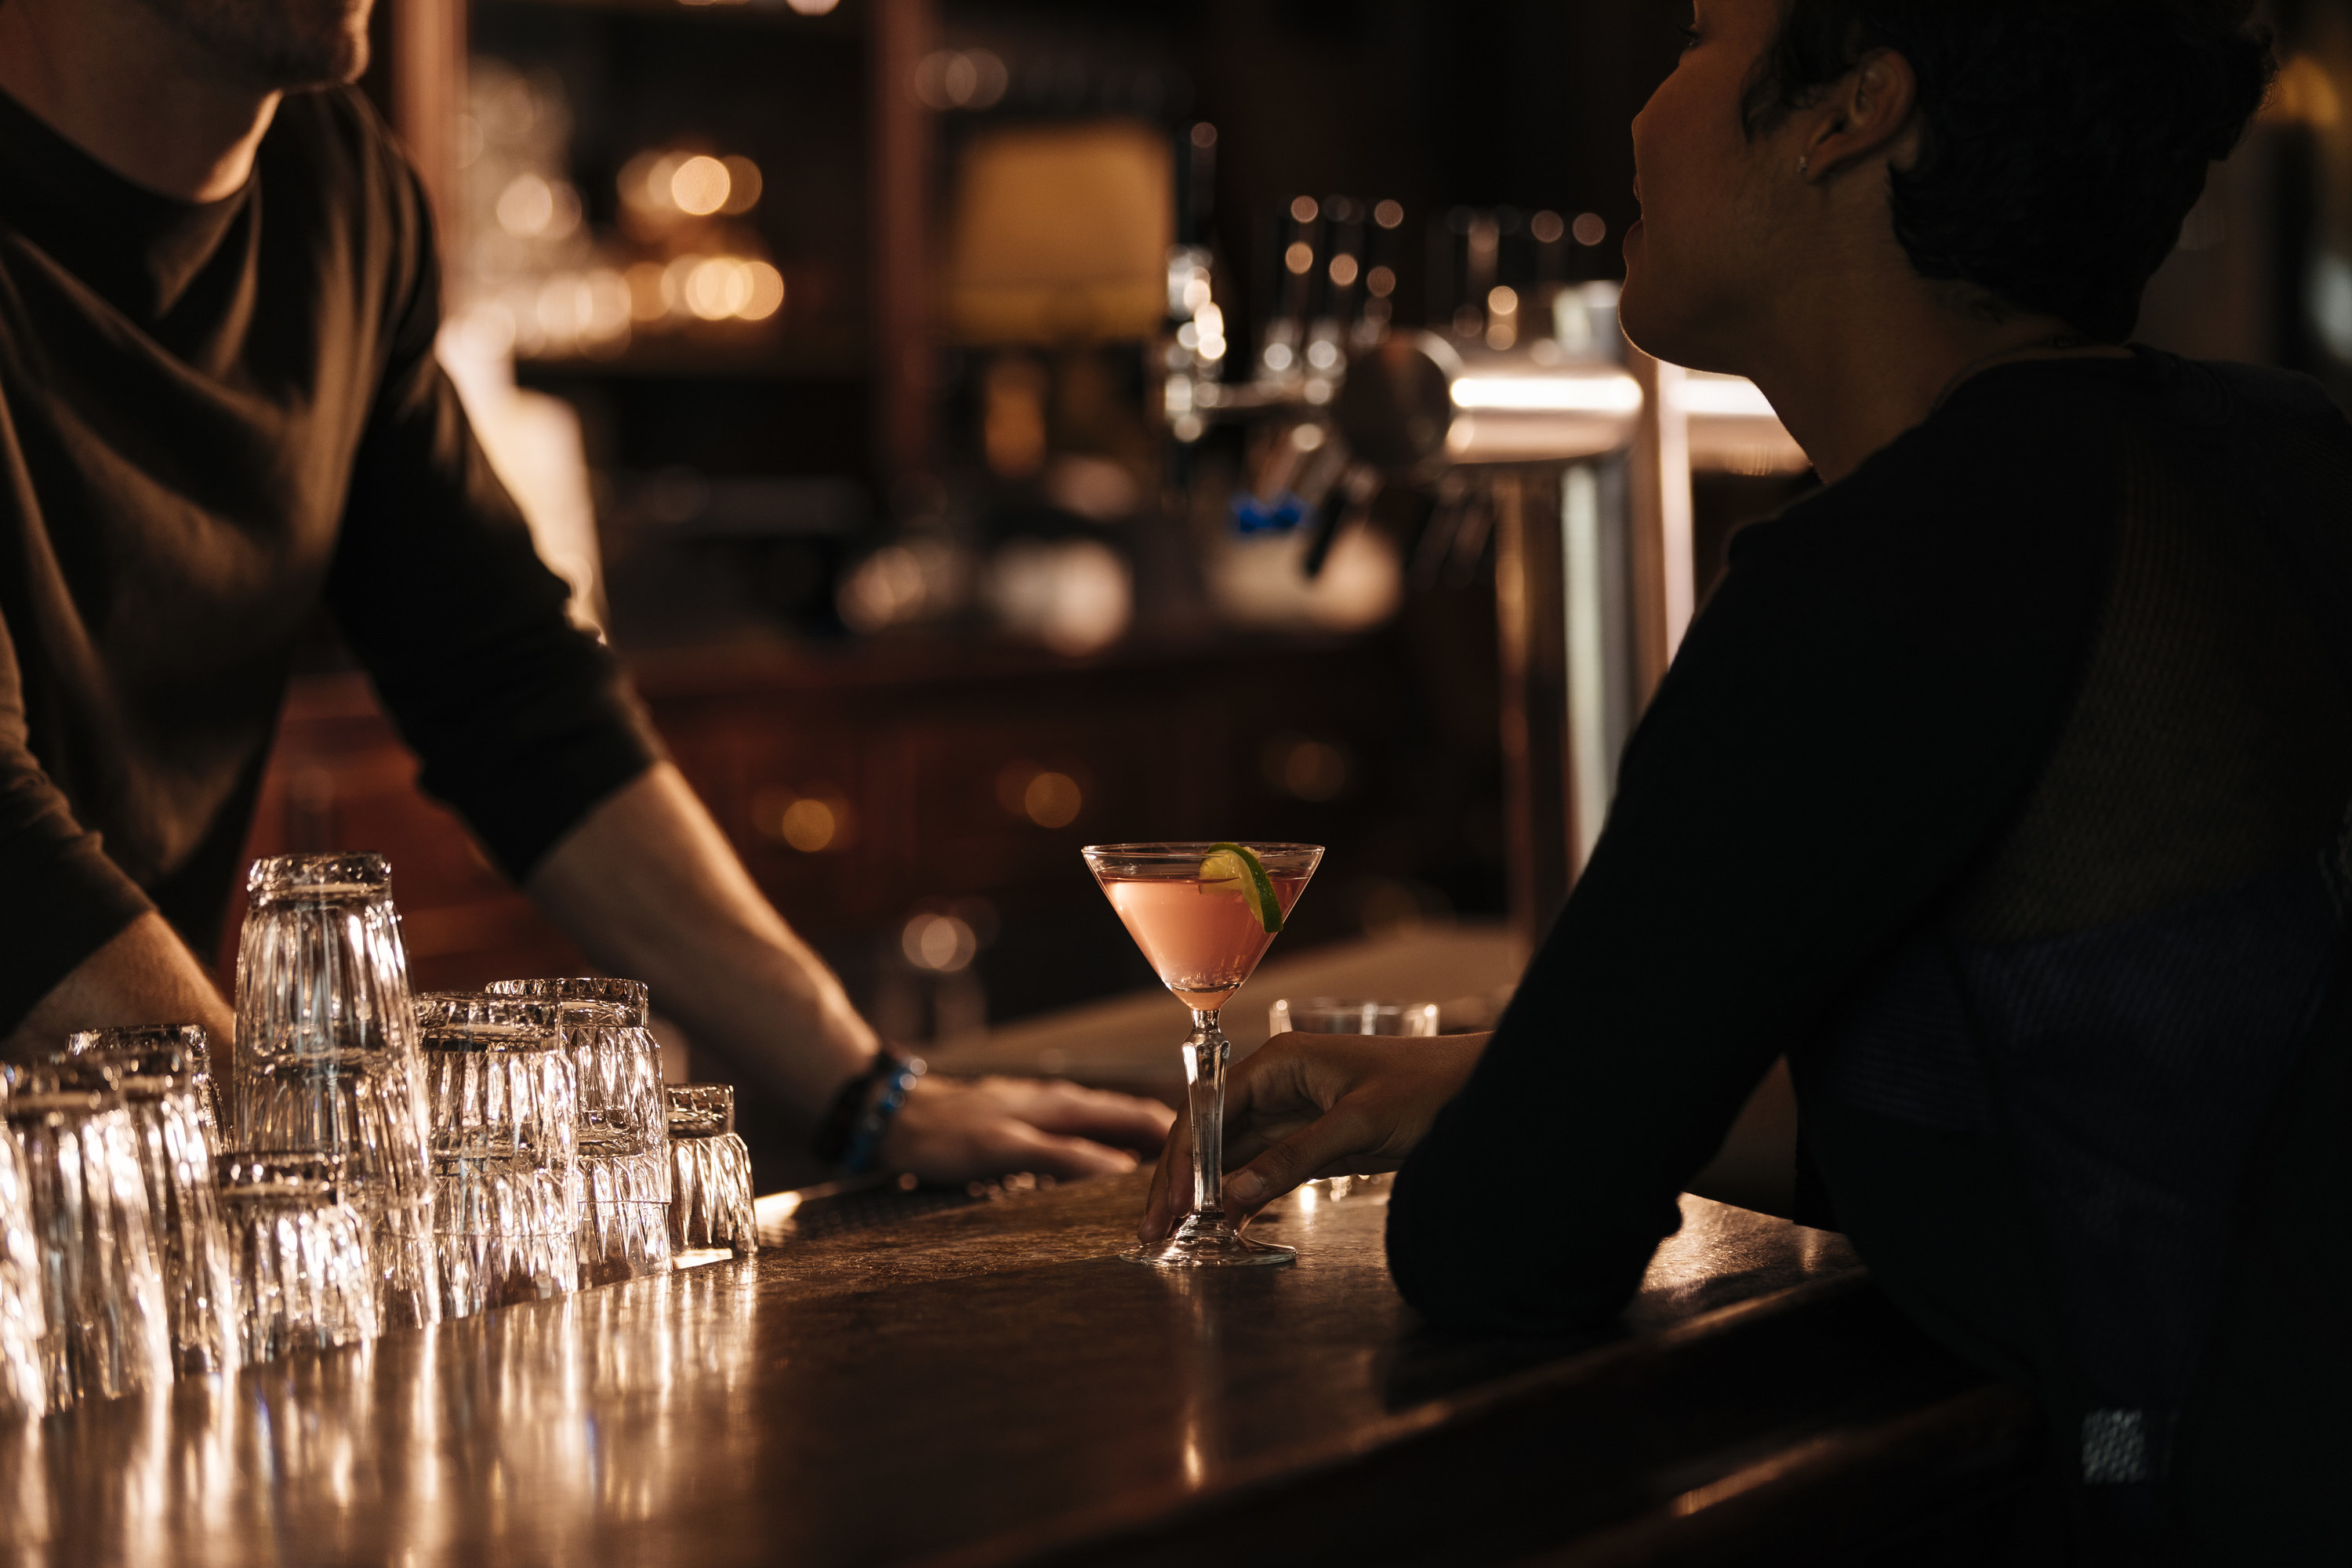 A bartender talking to a customer in a dark bar